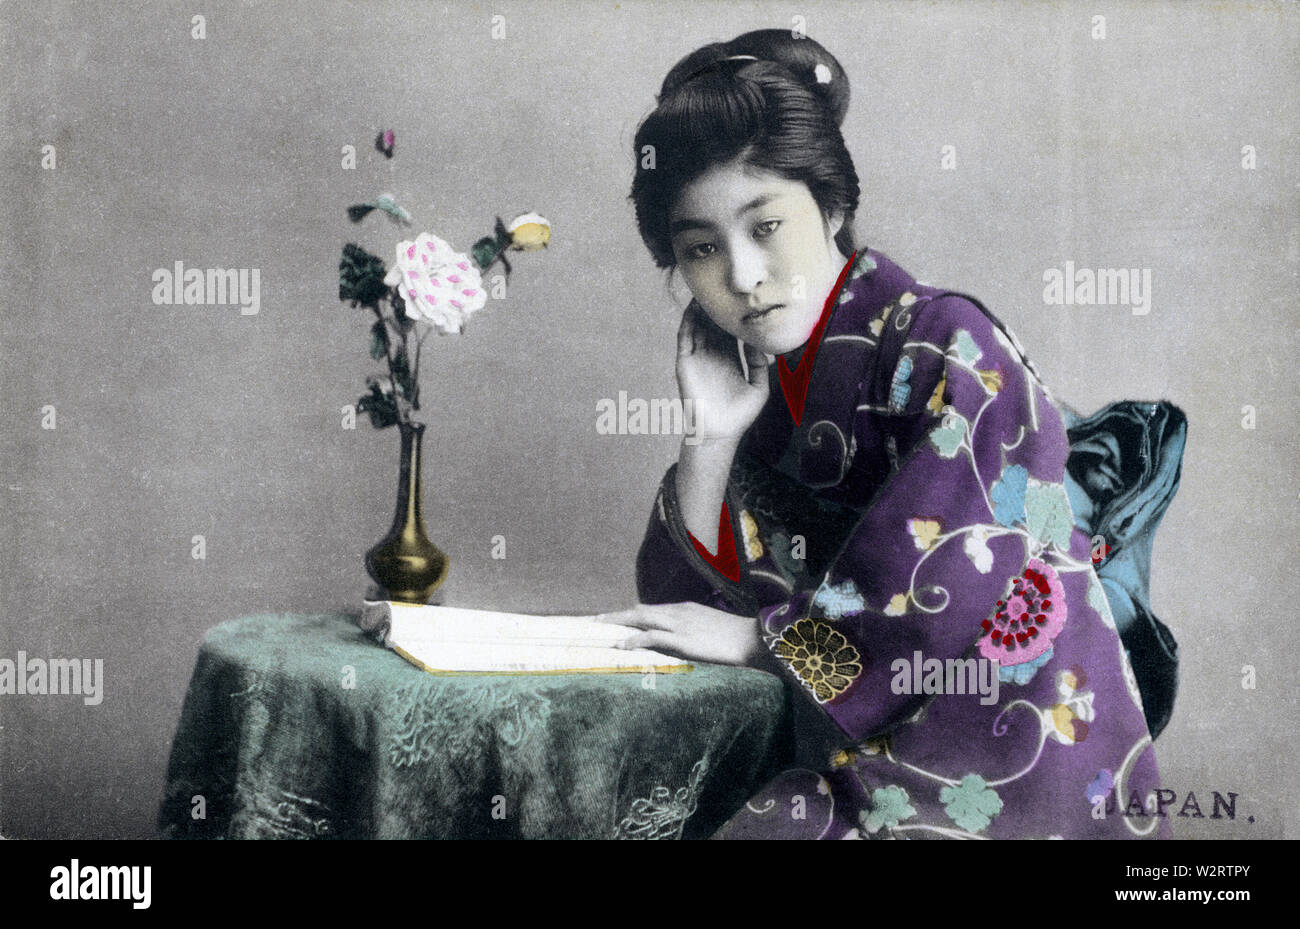 [1900s Japan - Japanische Frau im Kimono] - junge japanische Frau im Kimono und traditionelle Frisur, ein Buch zu lesen. 20. jahrhundert alte Ansichtskarte. Stockfoto